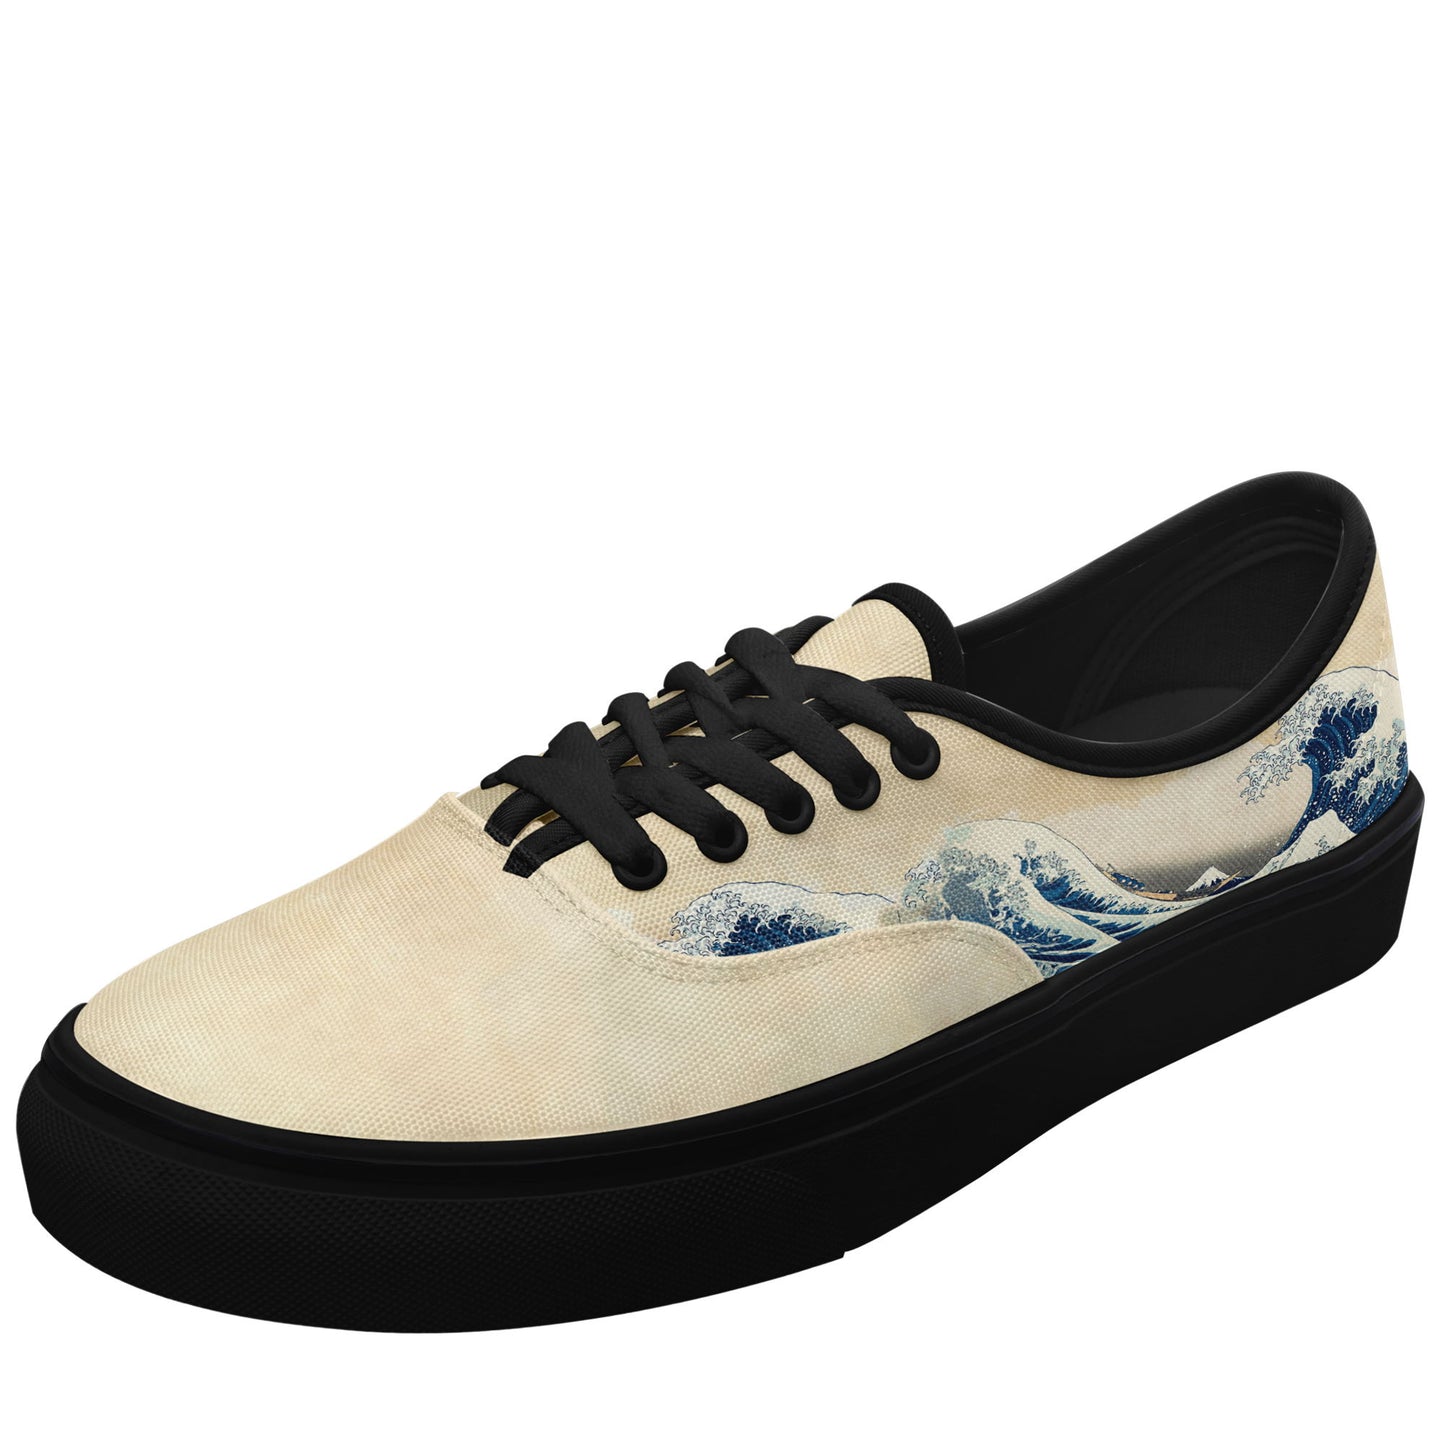 personalized customization print on demand casual shoes 7213 japanese retro art style ukiyo-e katsushika hokusai's the great wave off kanagawa sneakers black soles